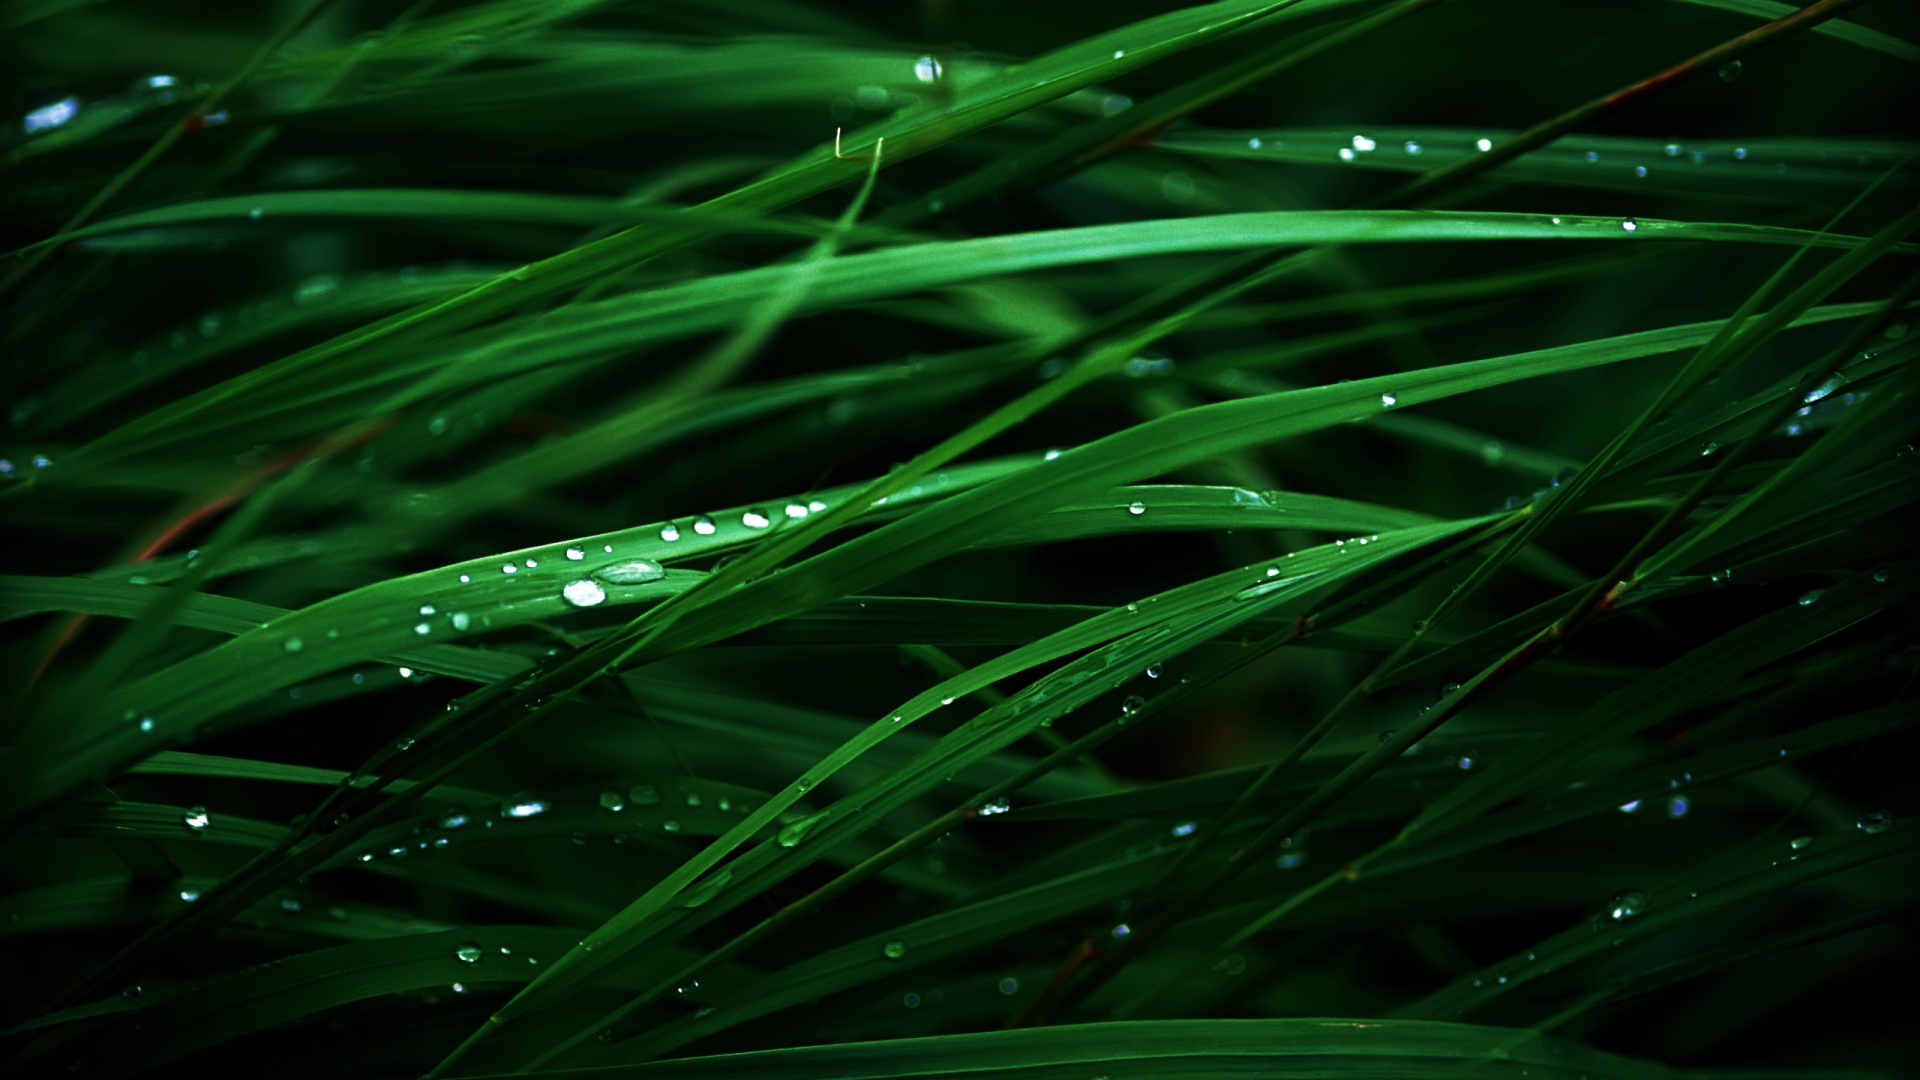 Lush Green Grass - High Definition, High Resolution HD Wallpapers